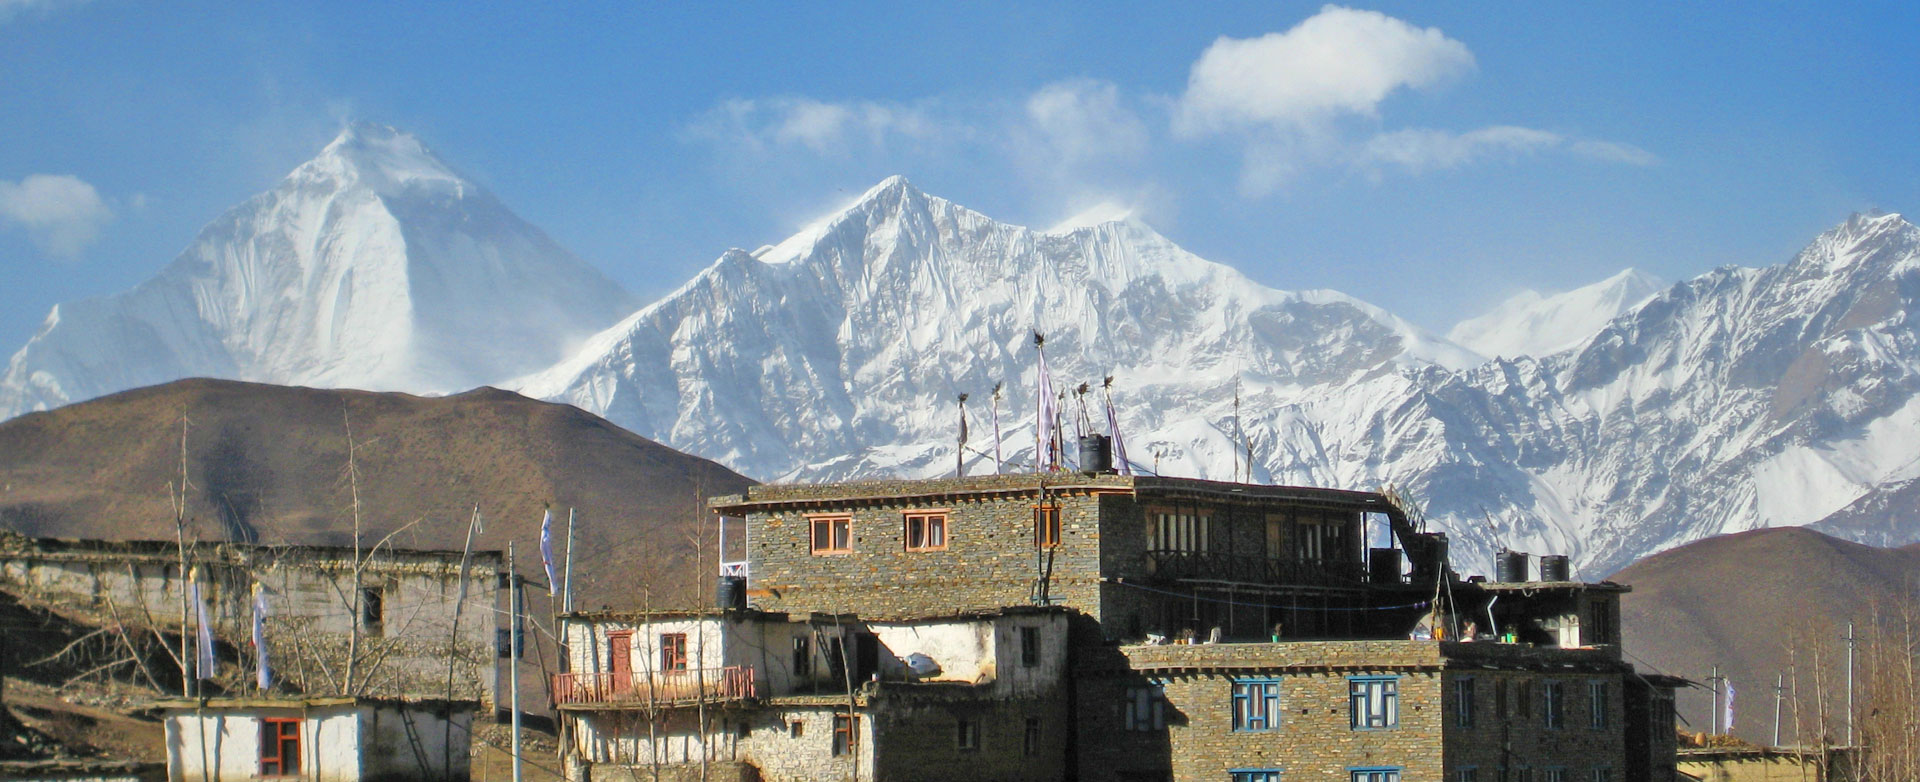 Dhaulagiri mountain from Muktinath village